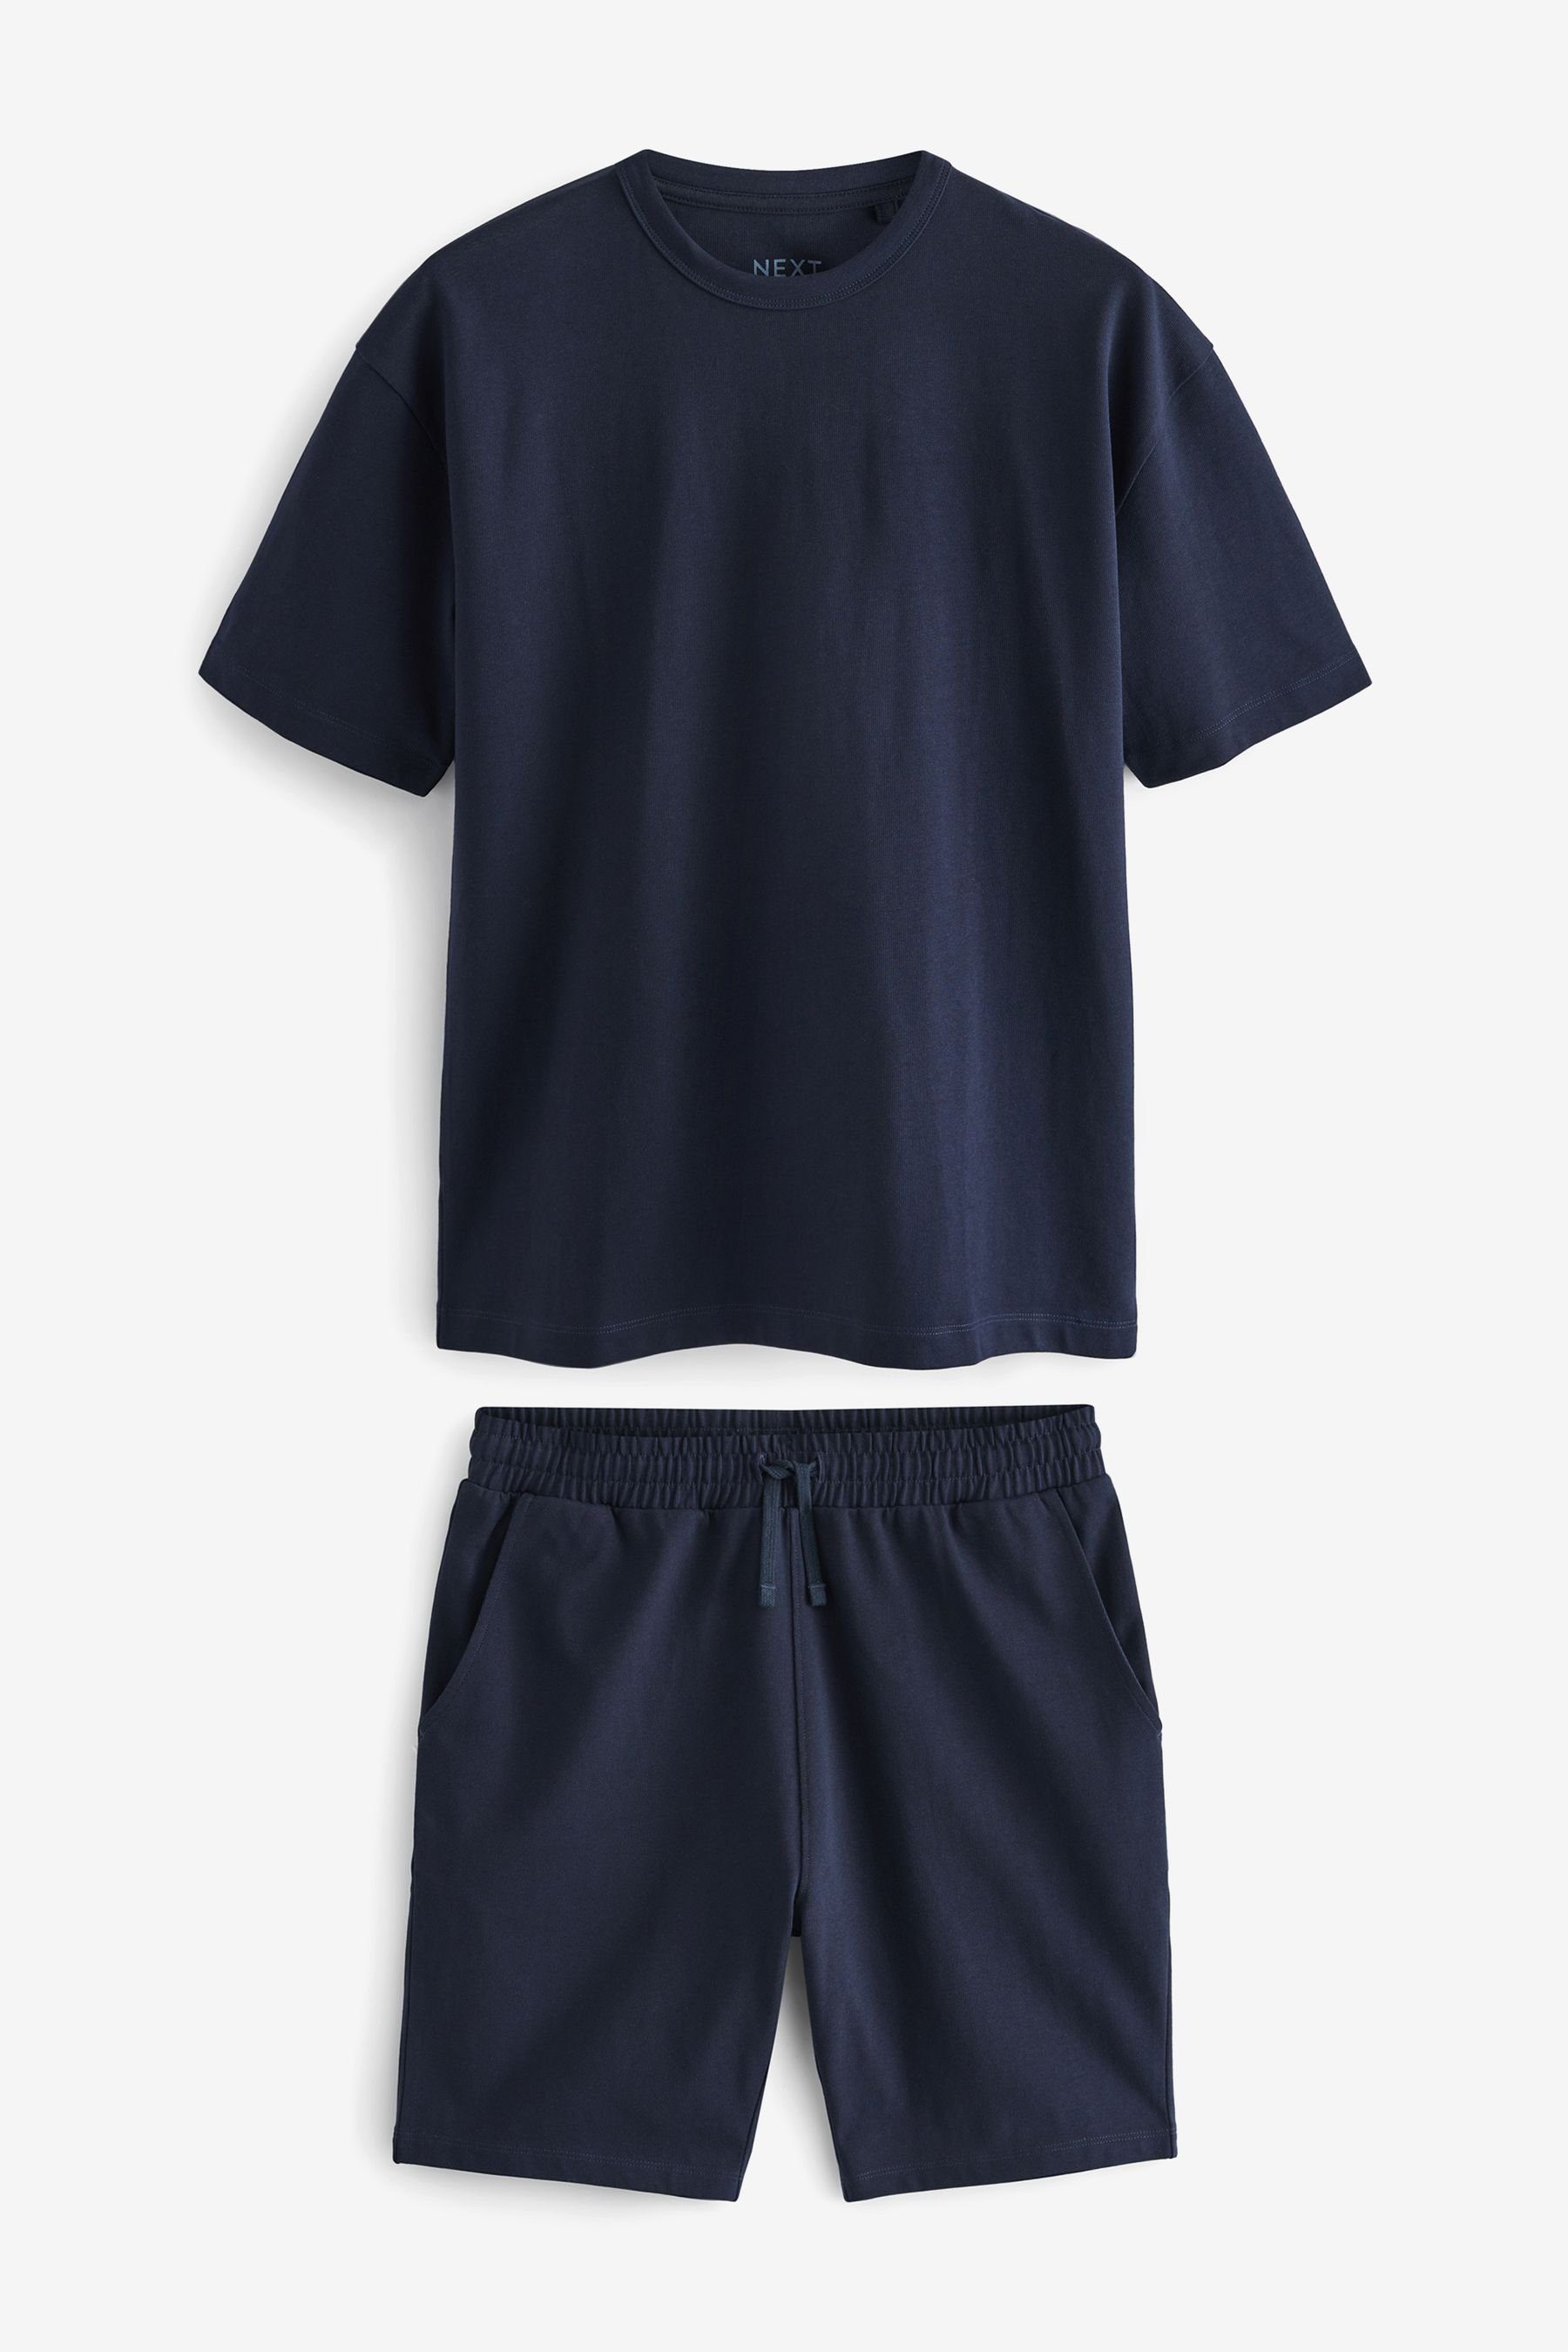 Next Pyjama Schlafanzug im Relaxed Fit (2 tlg) Navy Blue